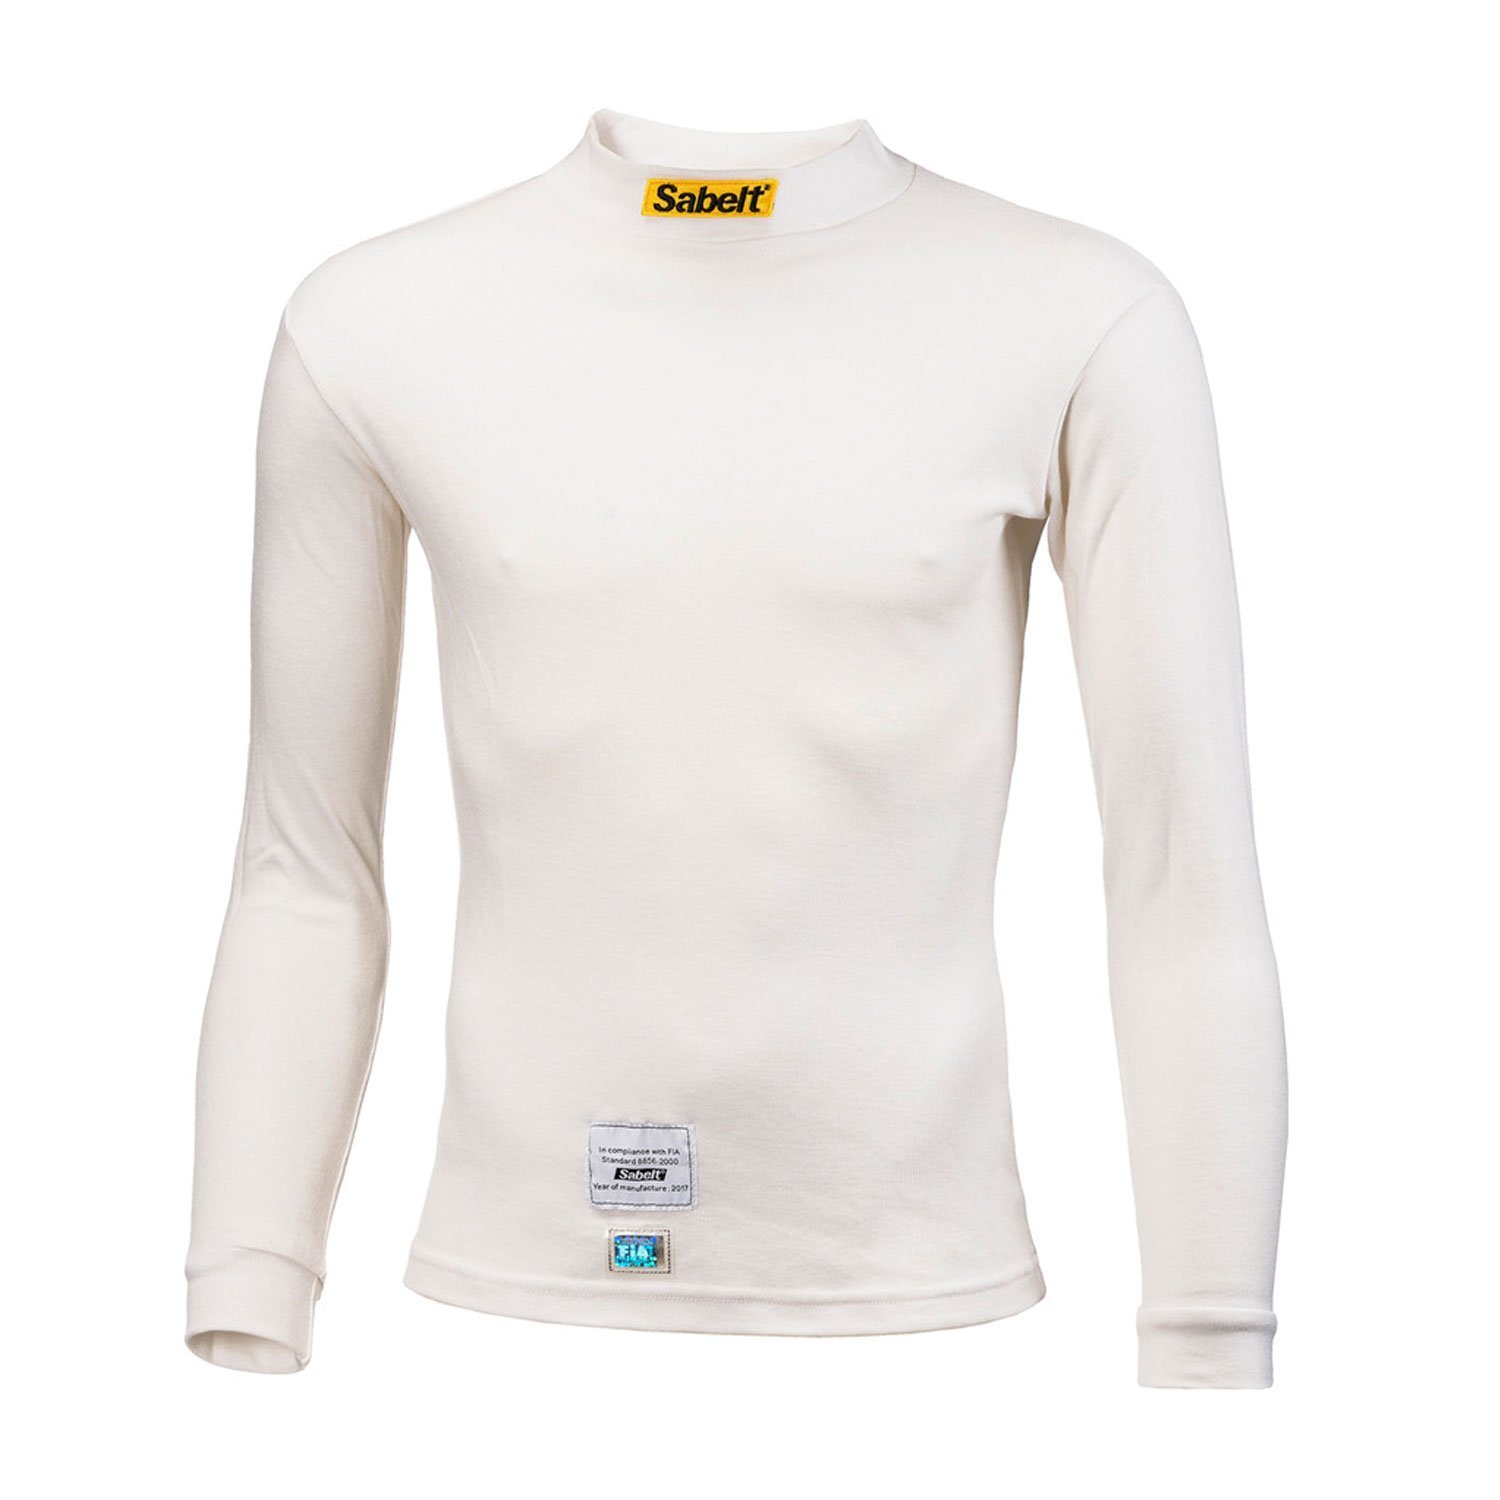 Sabelt UI-100 Longsleeve Top White (with FIA homologation) Racewear  Underwear Shop by Team Motorsport Equipment Sabelt